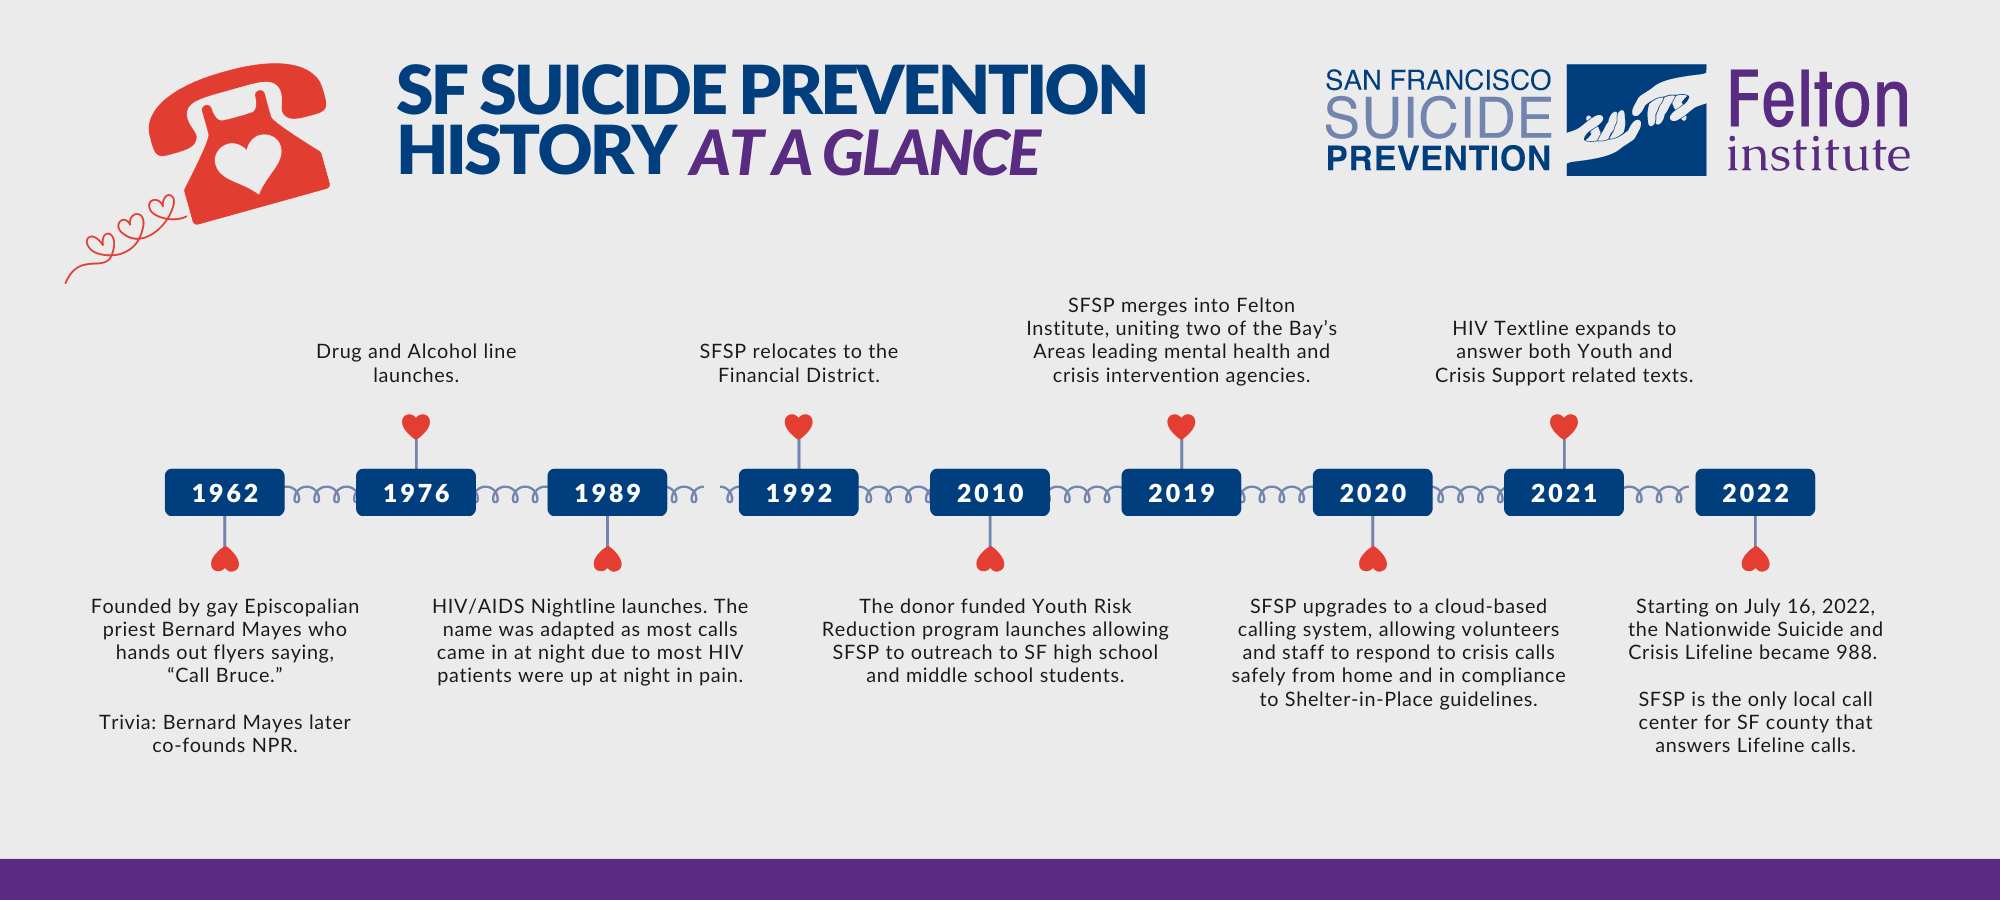 San Francisco Suicide Prevention History At A Glance Timeline